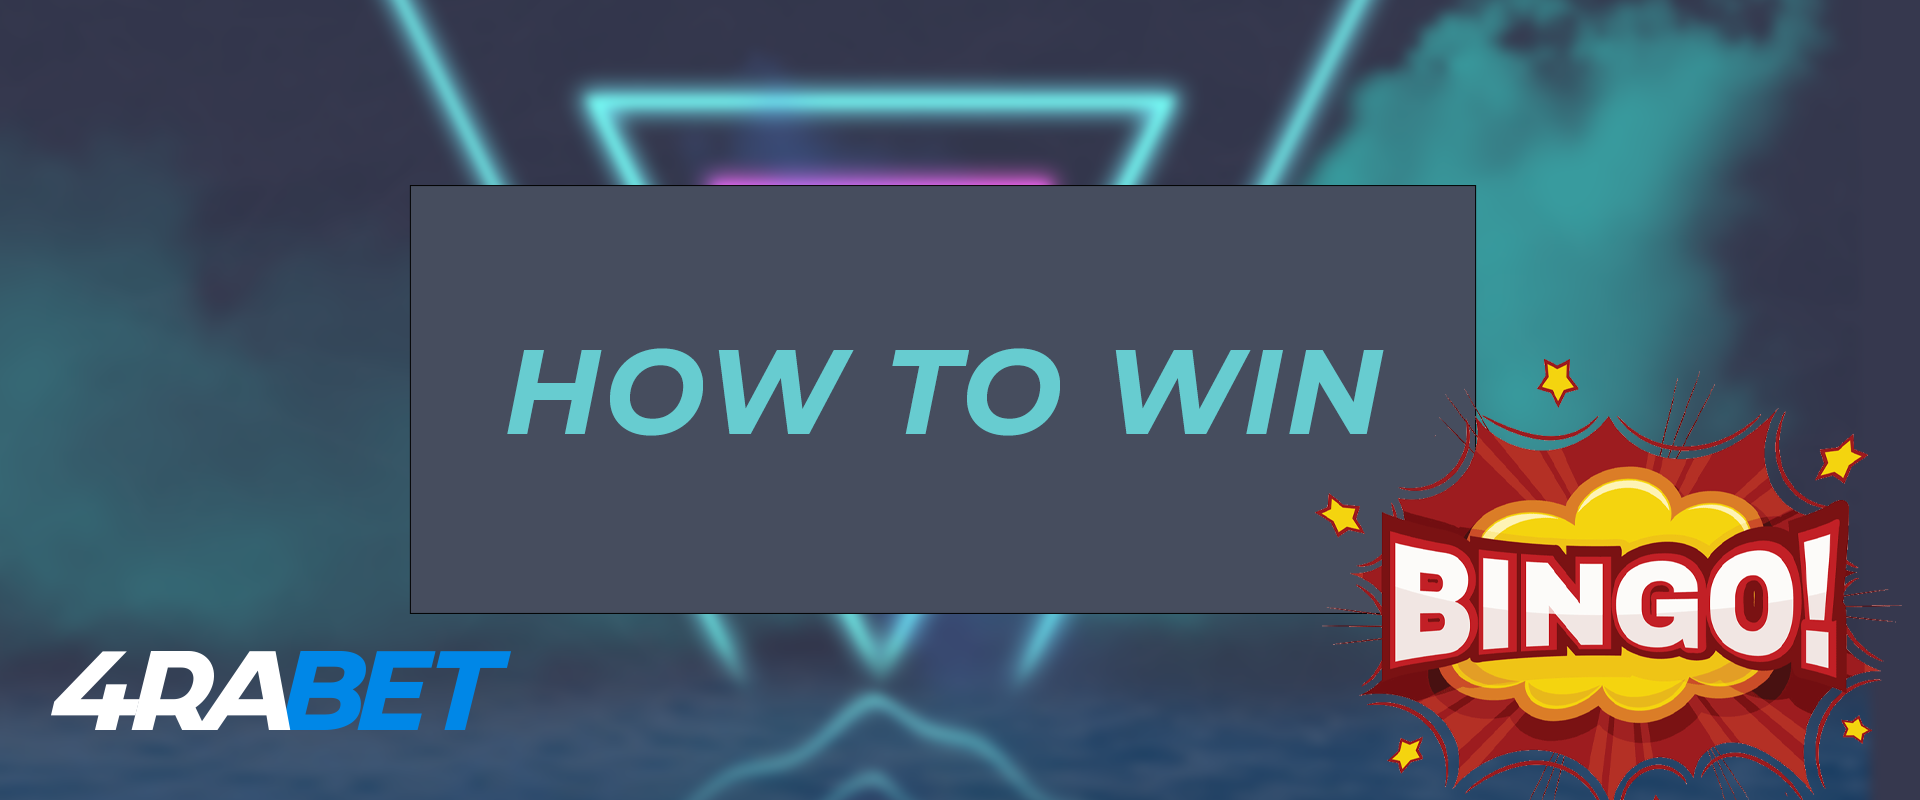 How to win money on bingo on the 4rabet.